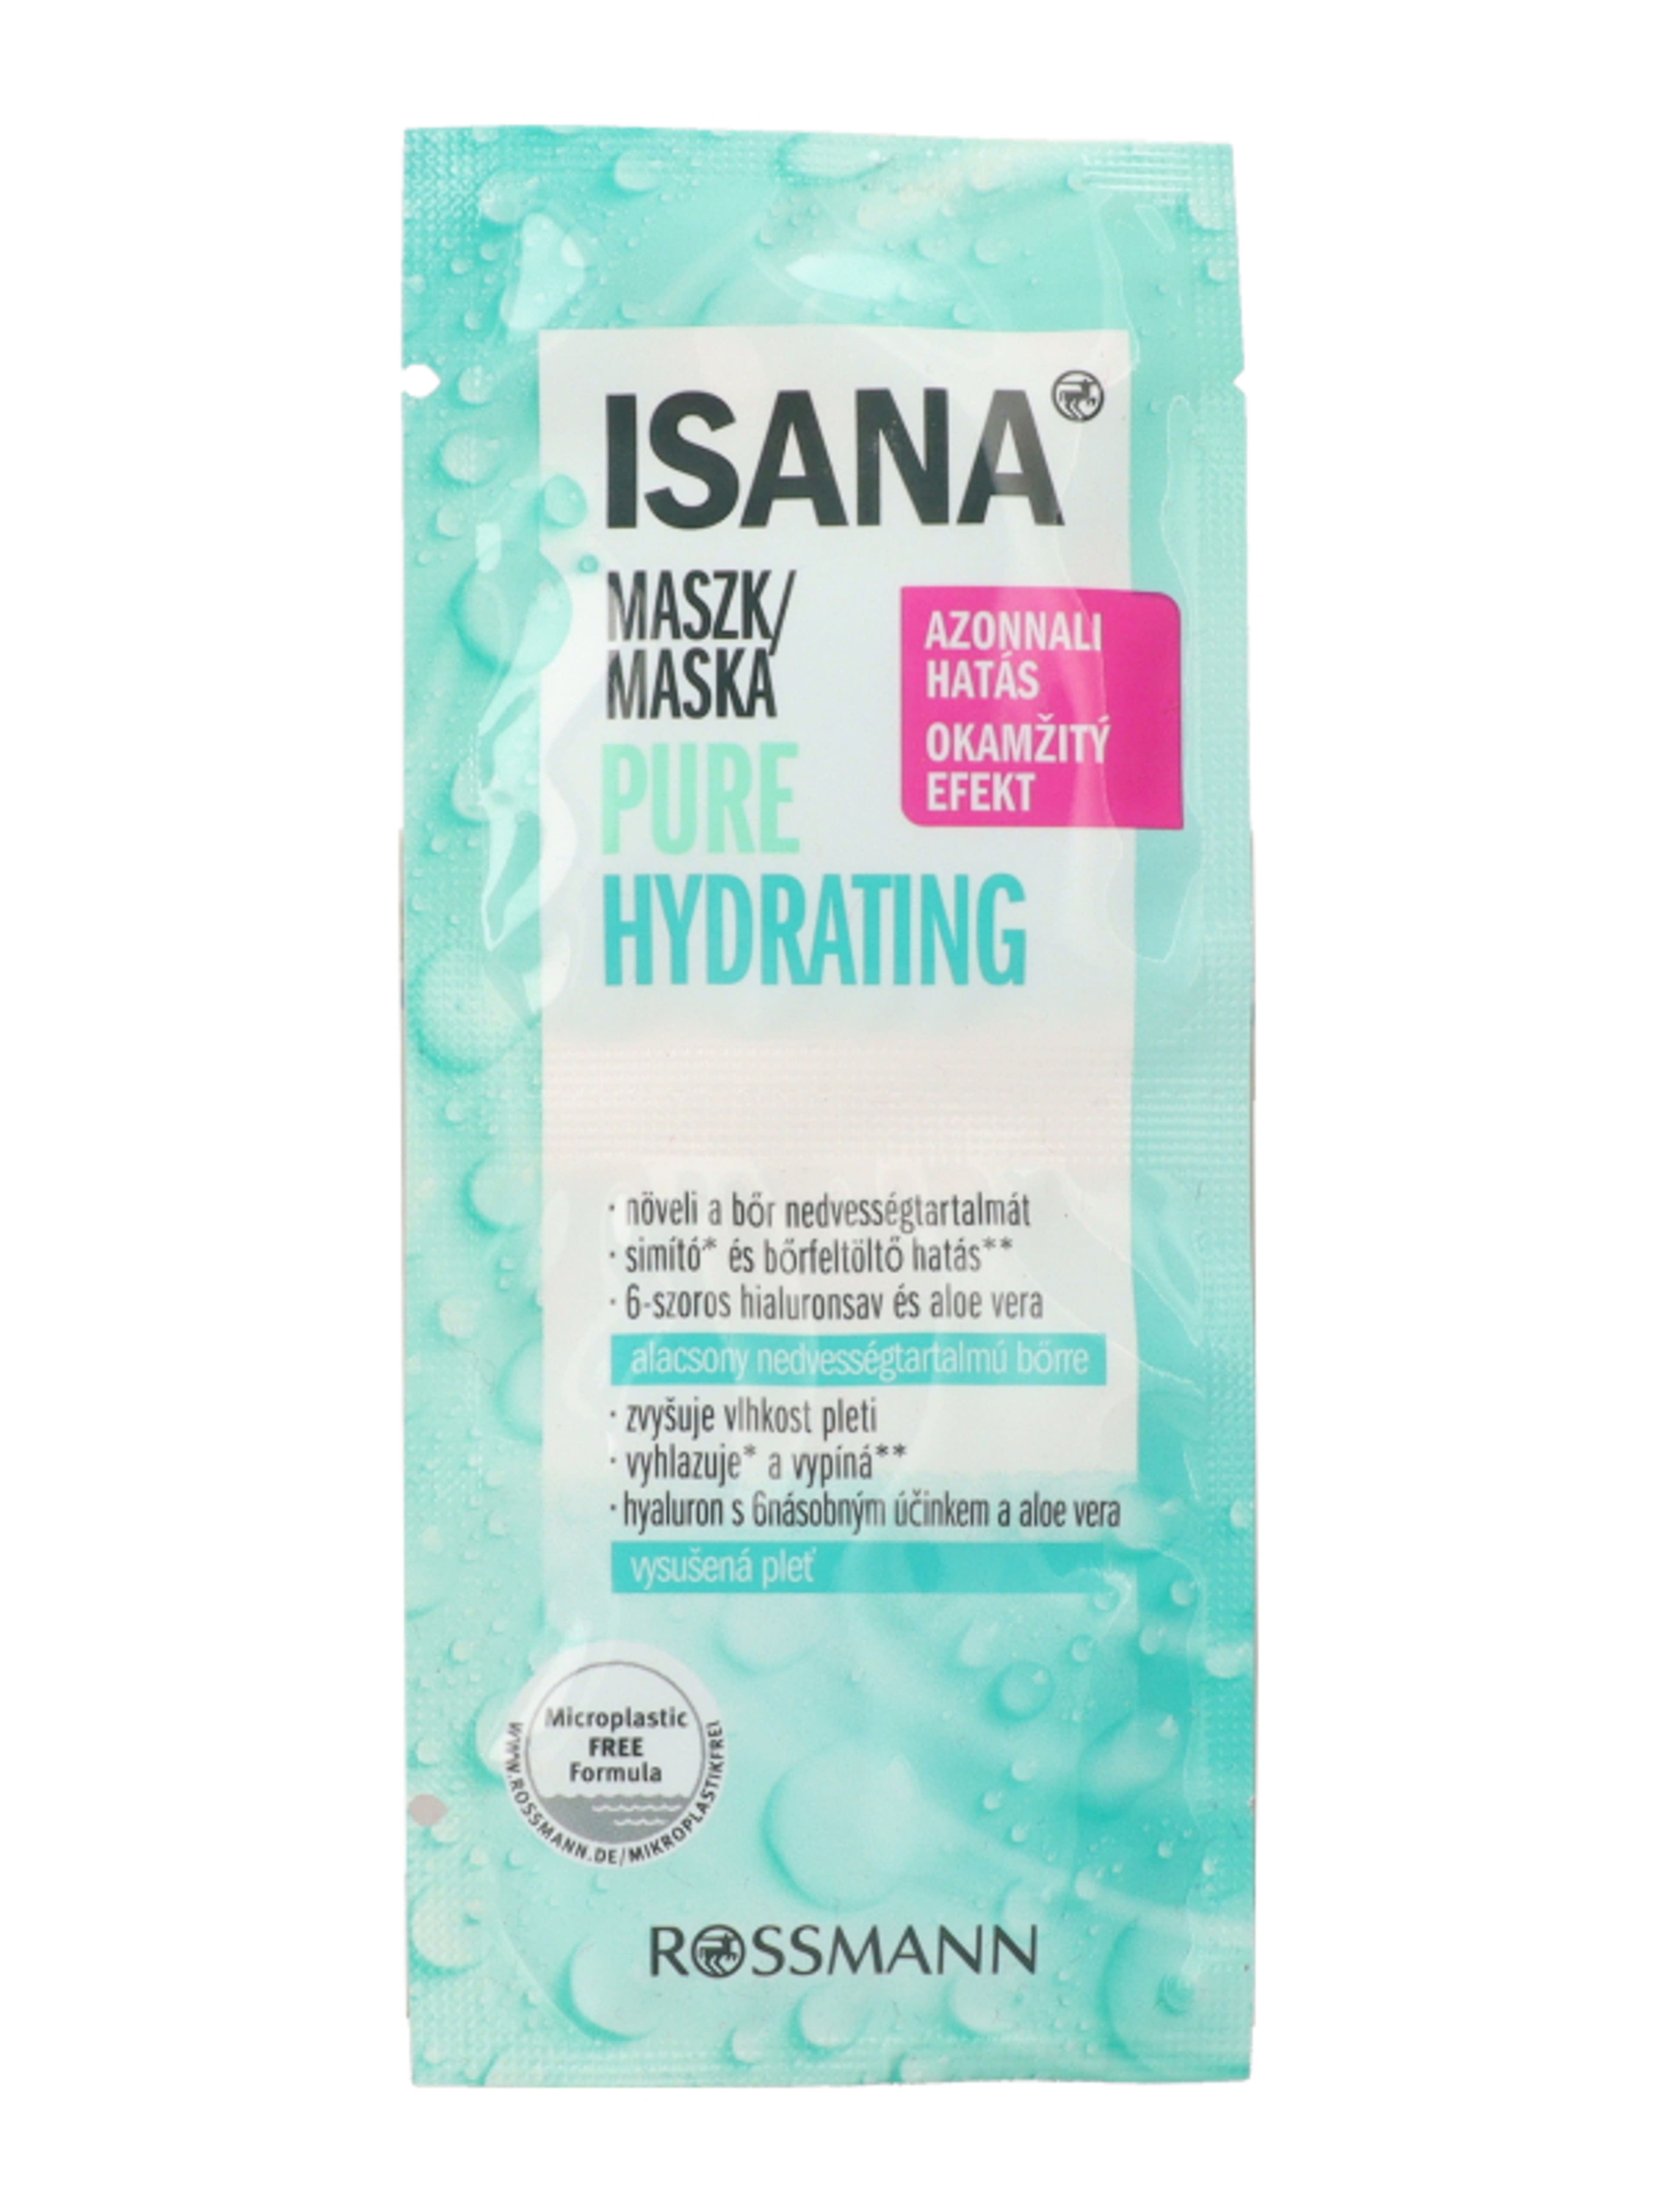 Isana Pure Hydrating maszk 2x8 ml - 16 ml-2